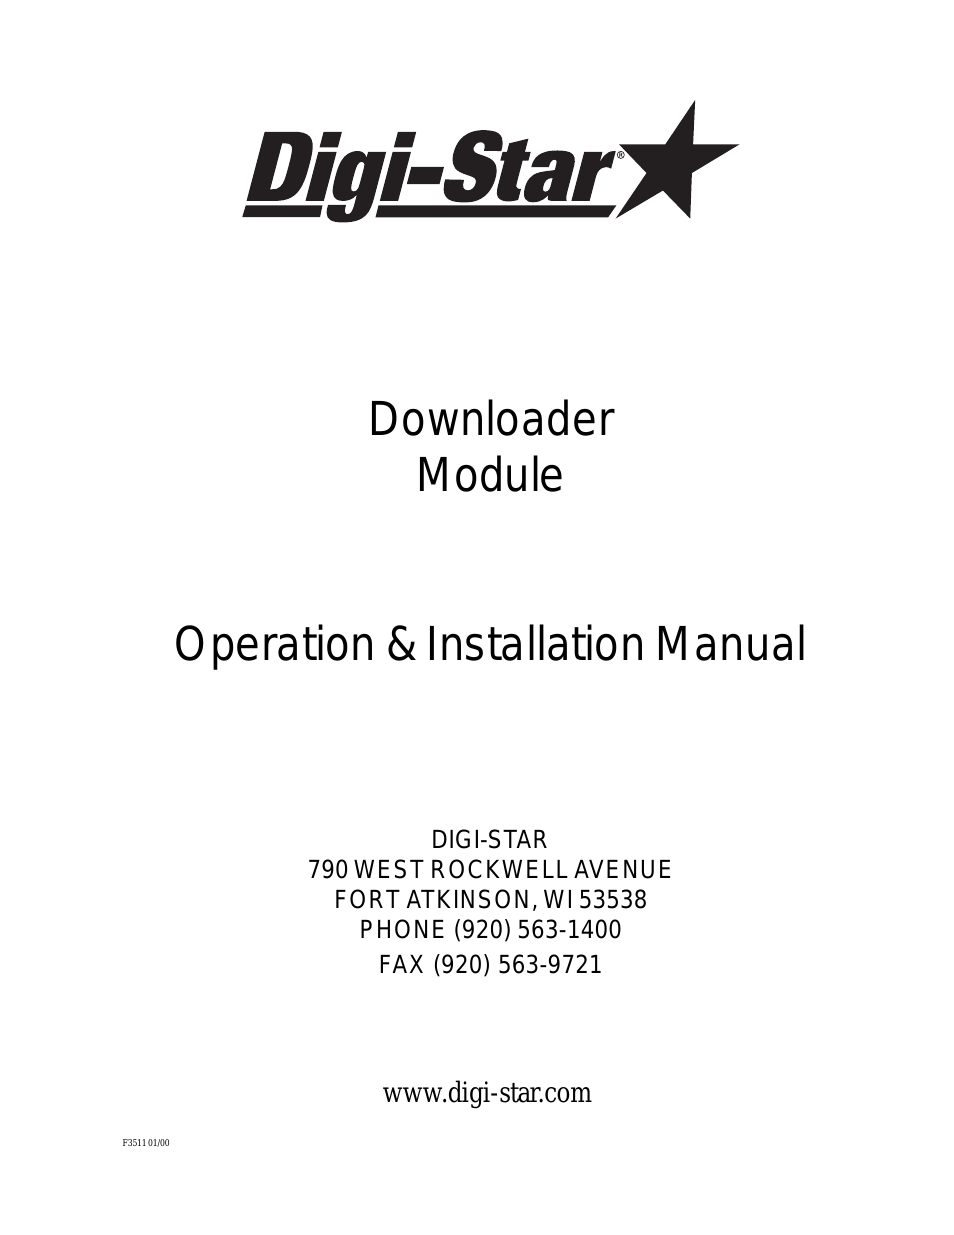 Downloader Module